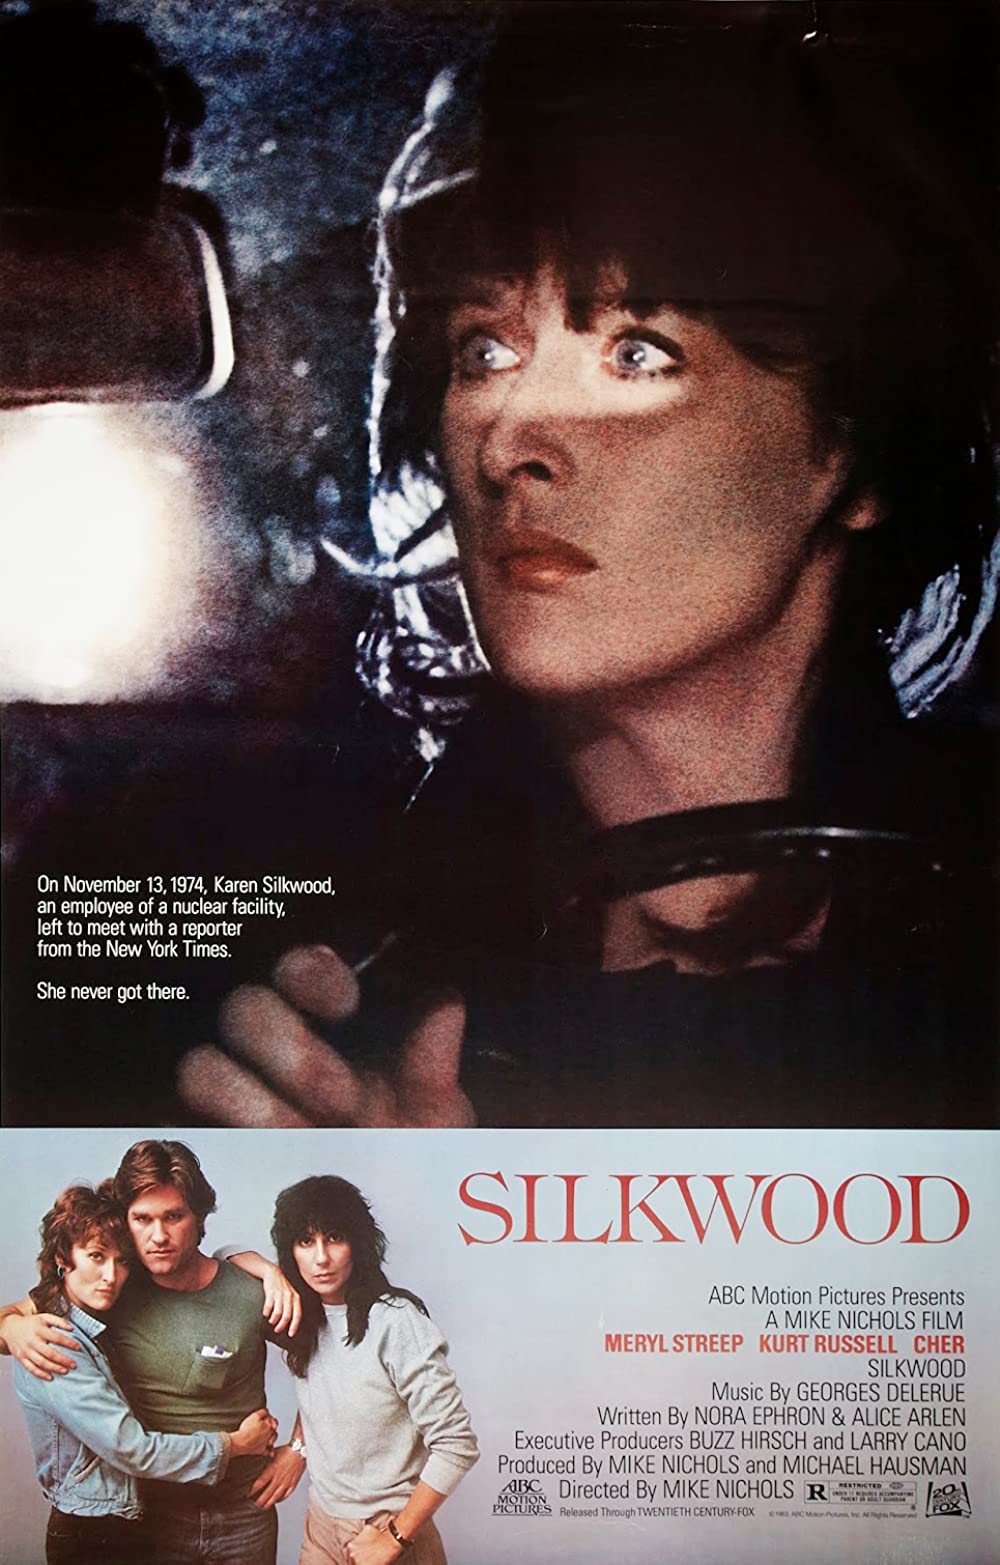 Filmbeschreibung zu Silkwood